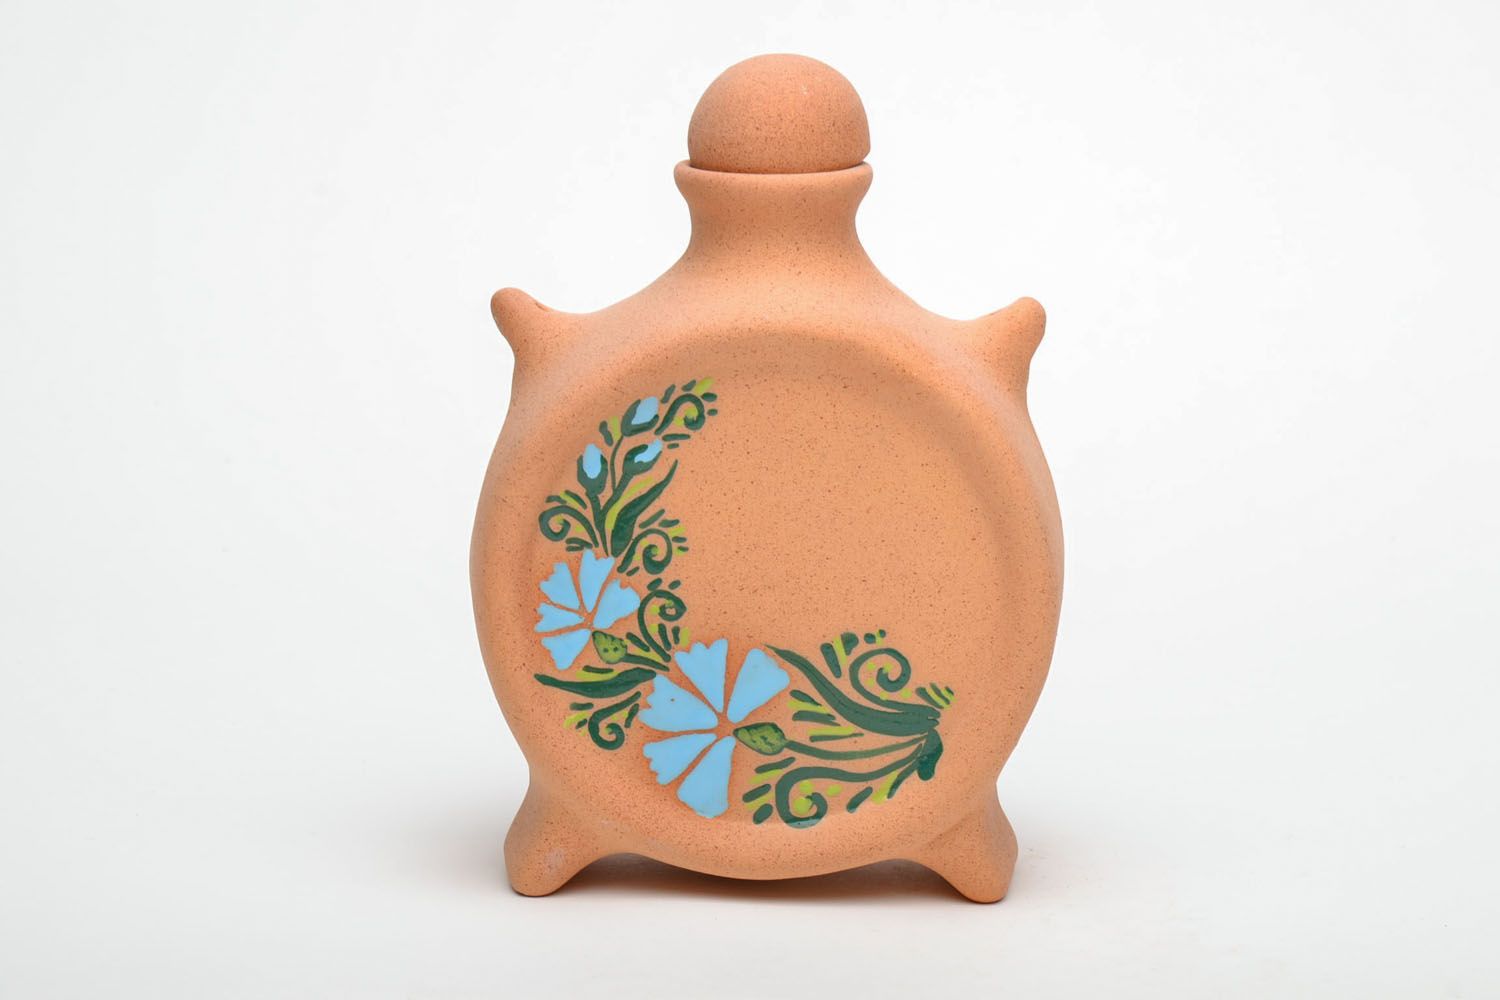 Decorative ceramic bottle photo 2